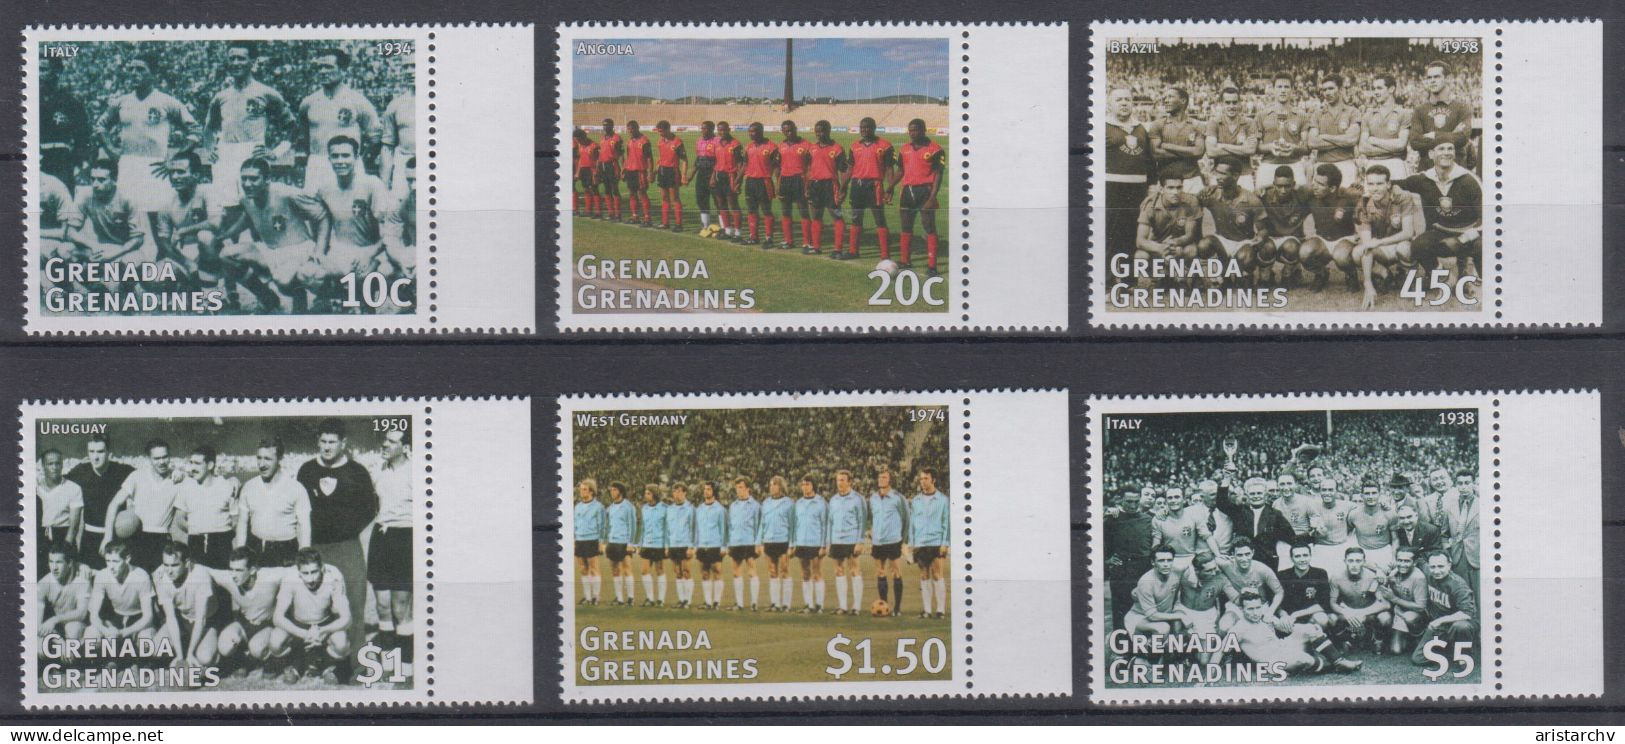 GRENADA GRENADINES 1998 FOOTBALL WORLD CUP 2 S/SHEETS 2 SHEETLETS AND 6 STAMPS - 1998 – Francia